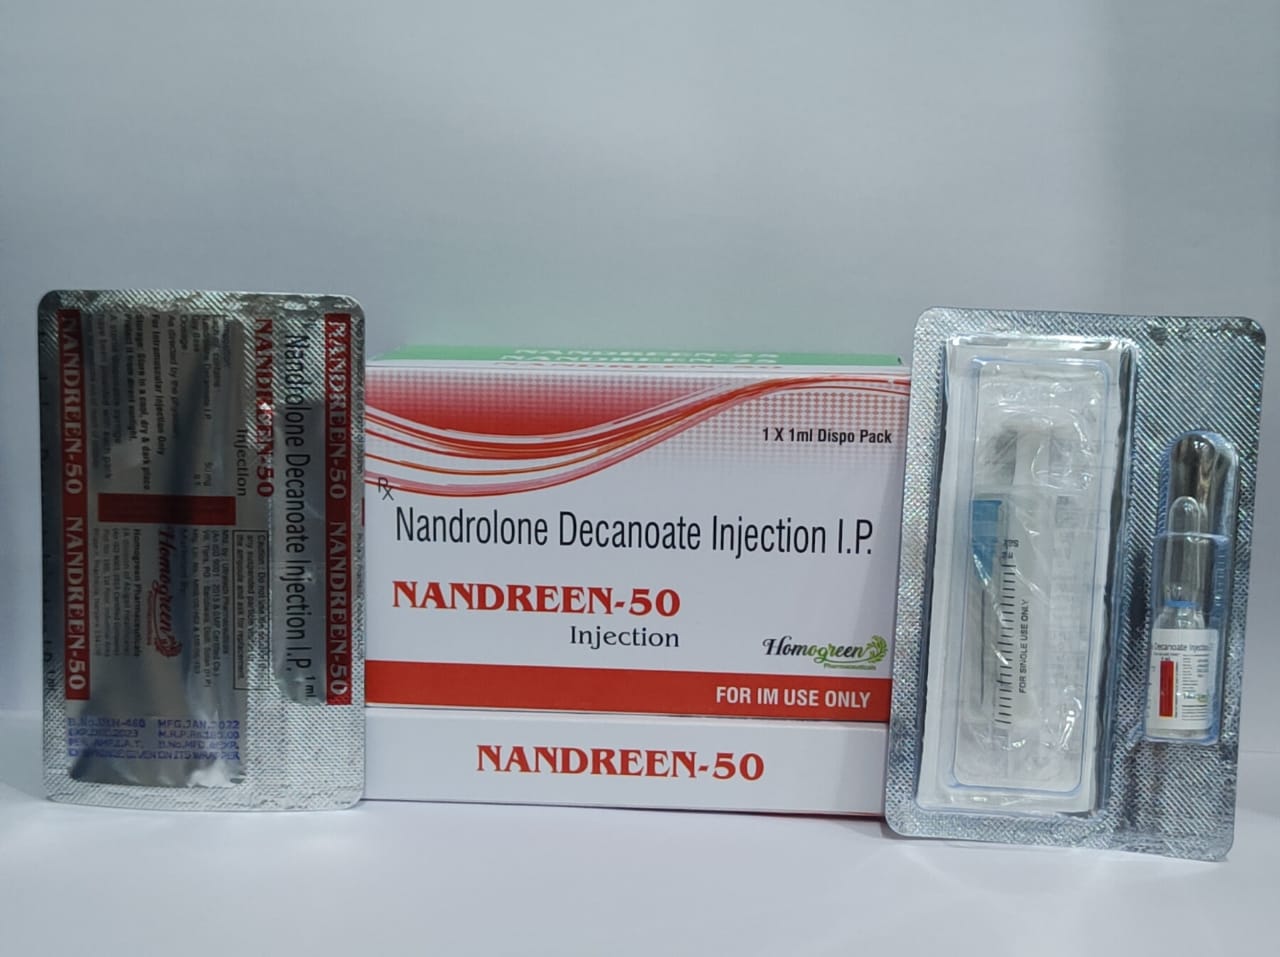 NANDREEN-50